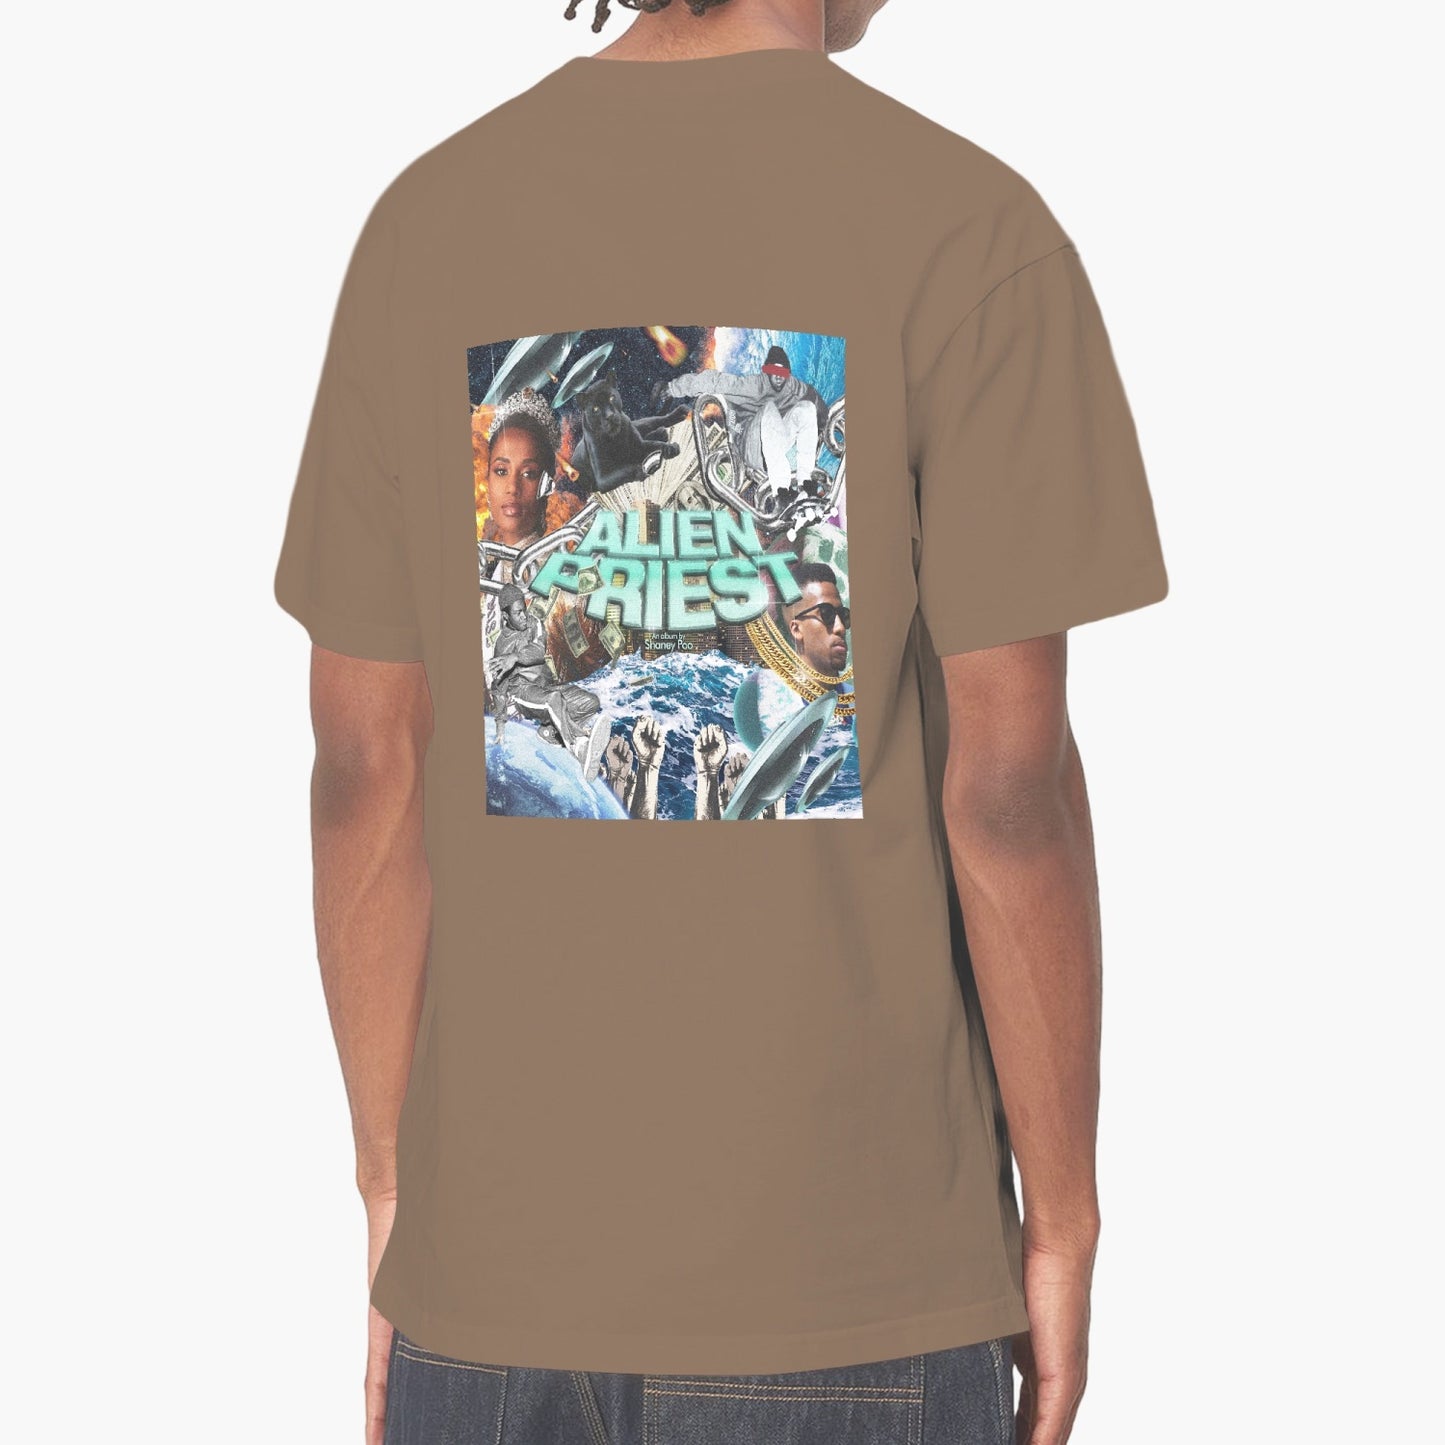 3. Alien Priest T-shirt